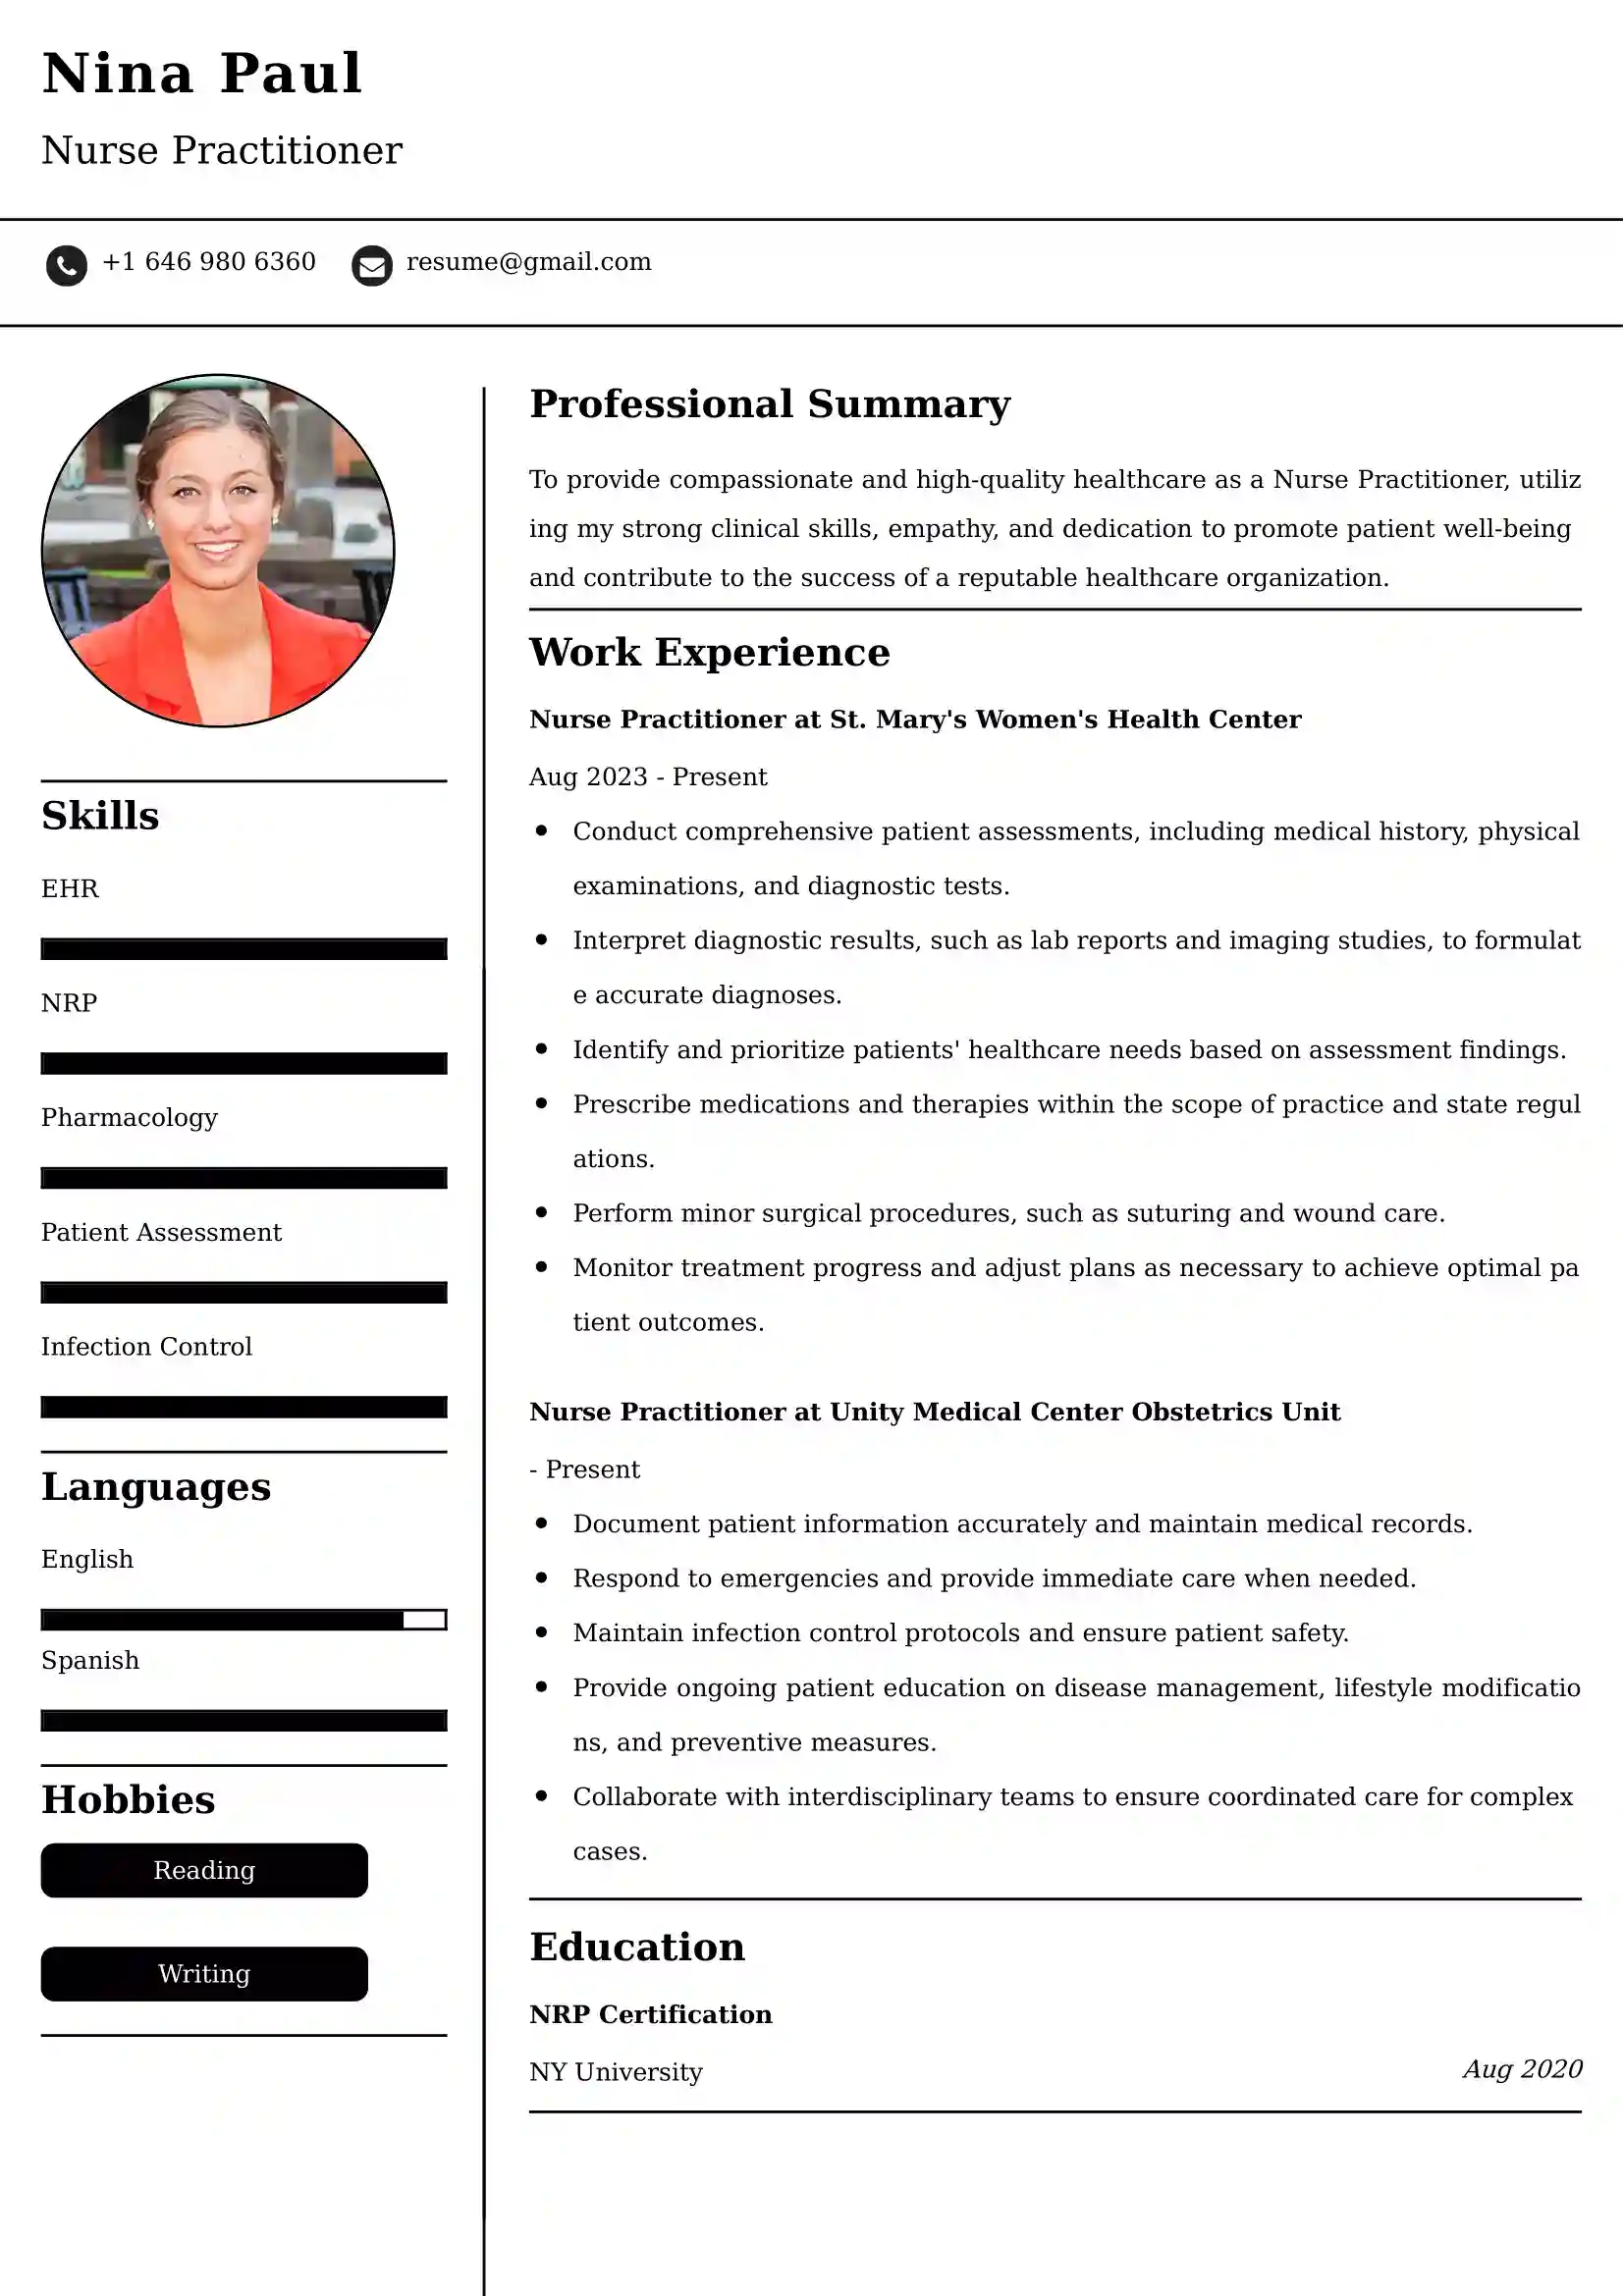 Nurse Practitioner CV Examples - US Format